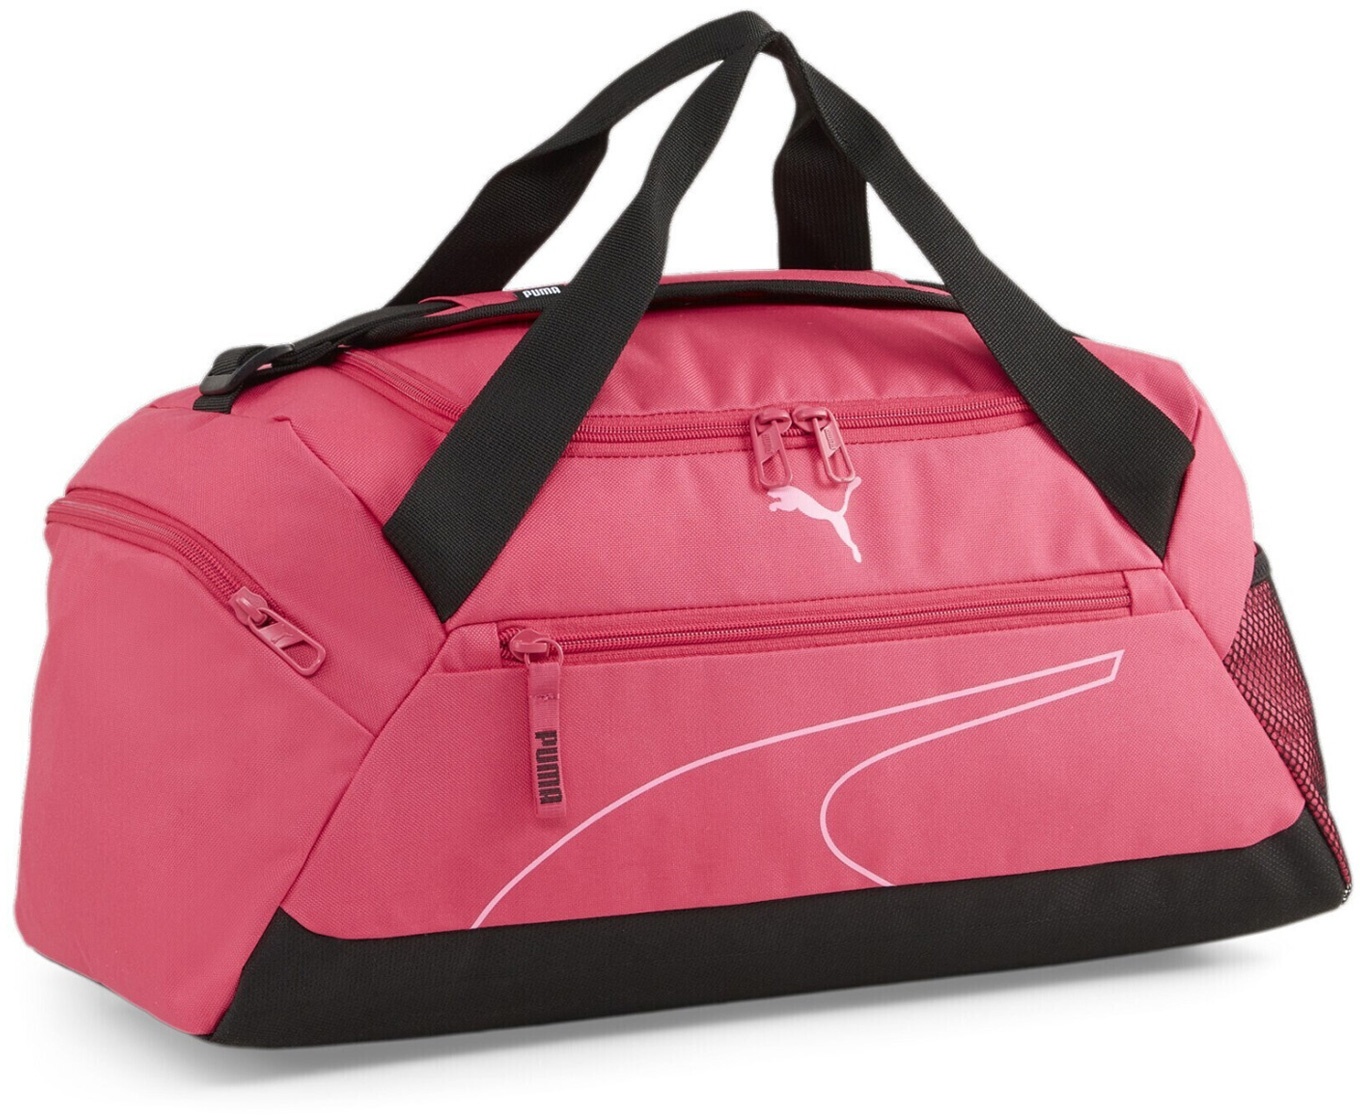 Puma Sporttasche S Fundamentals Sports Bag garnet rose-fast pink